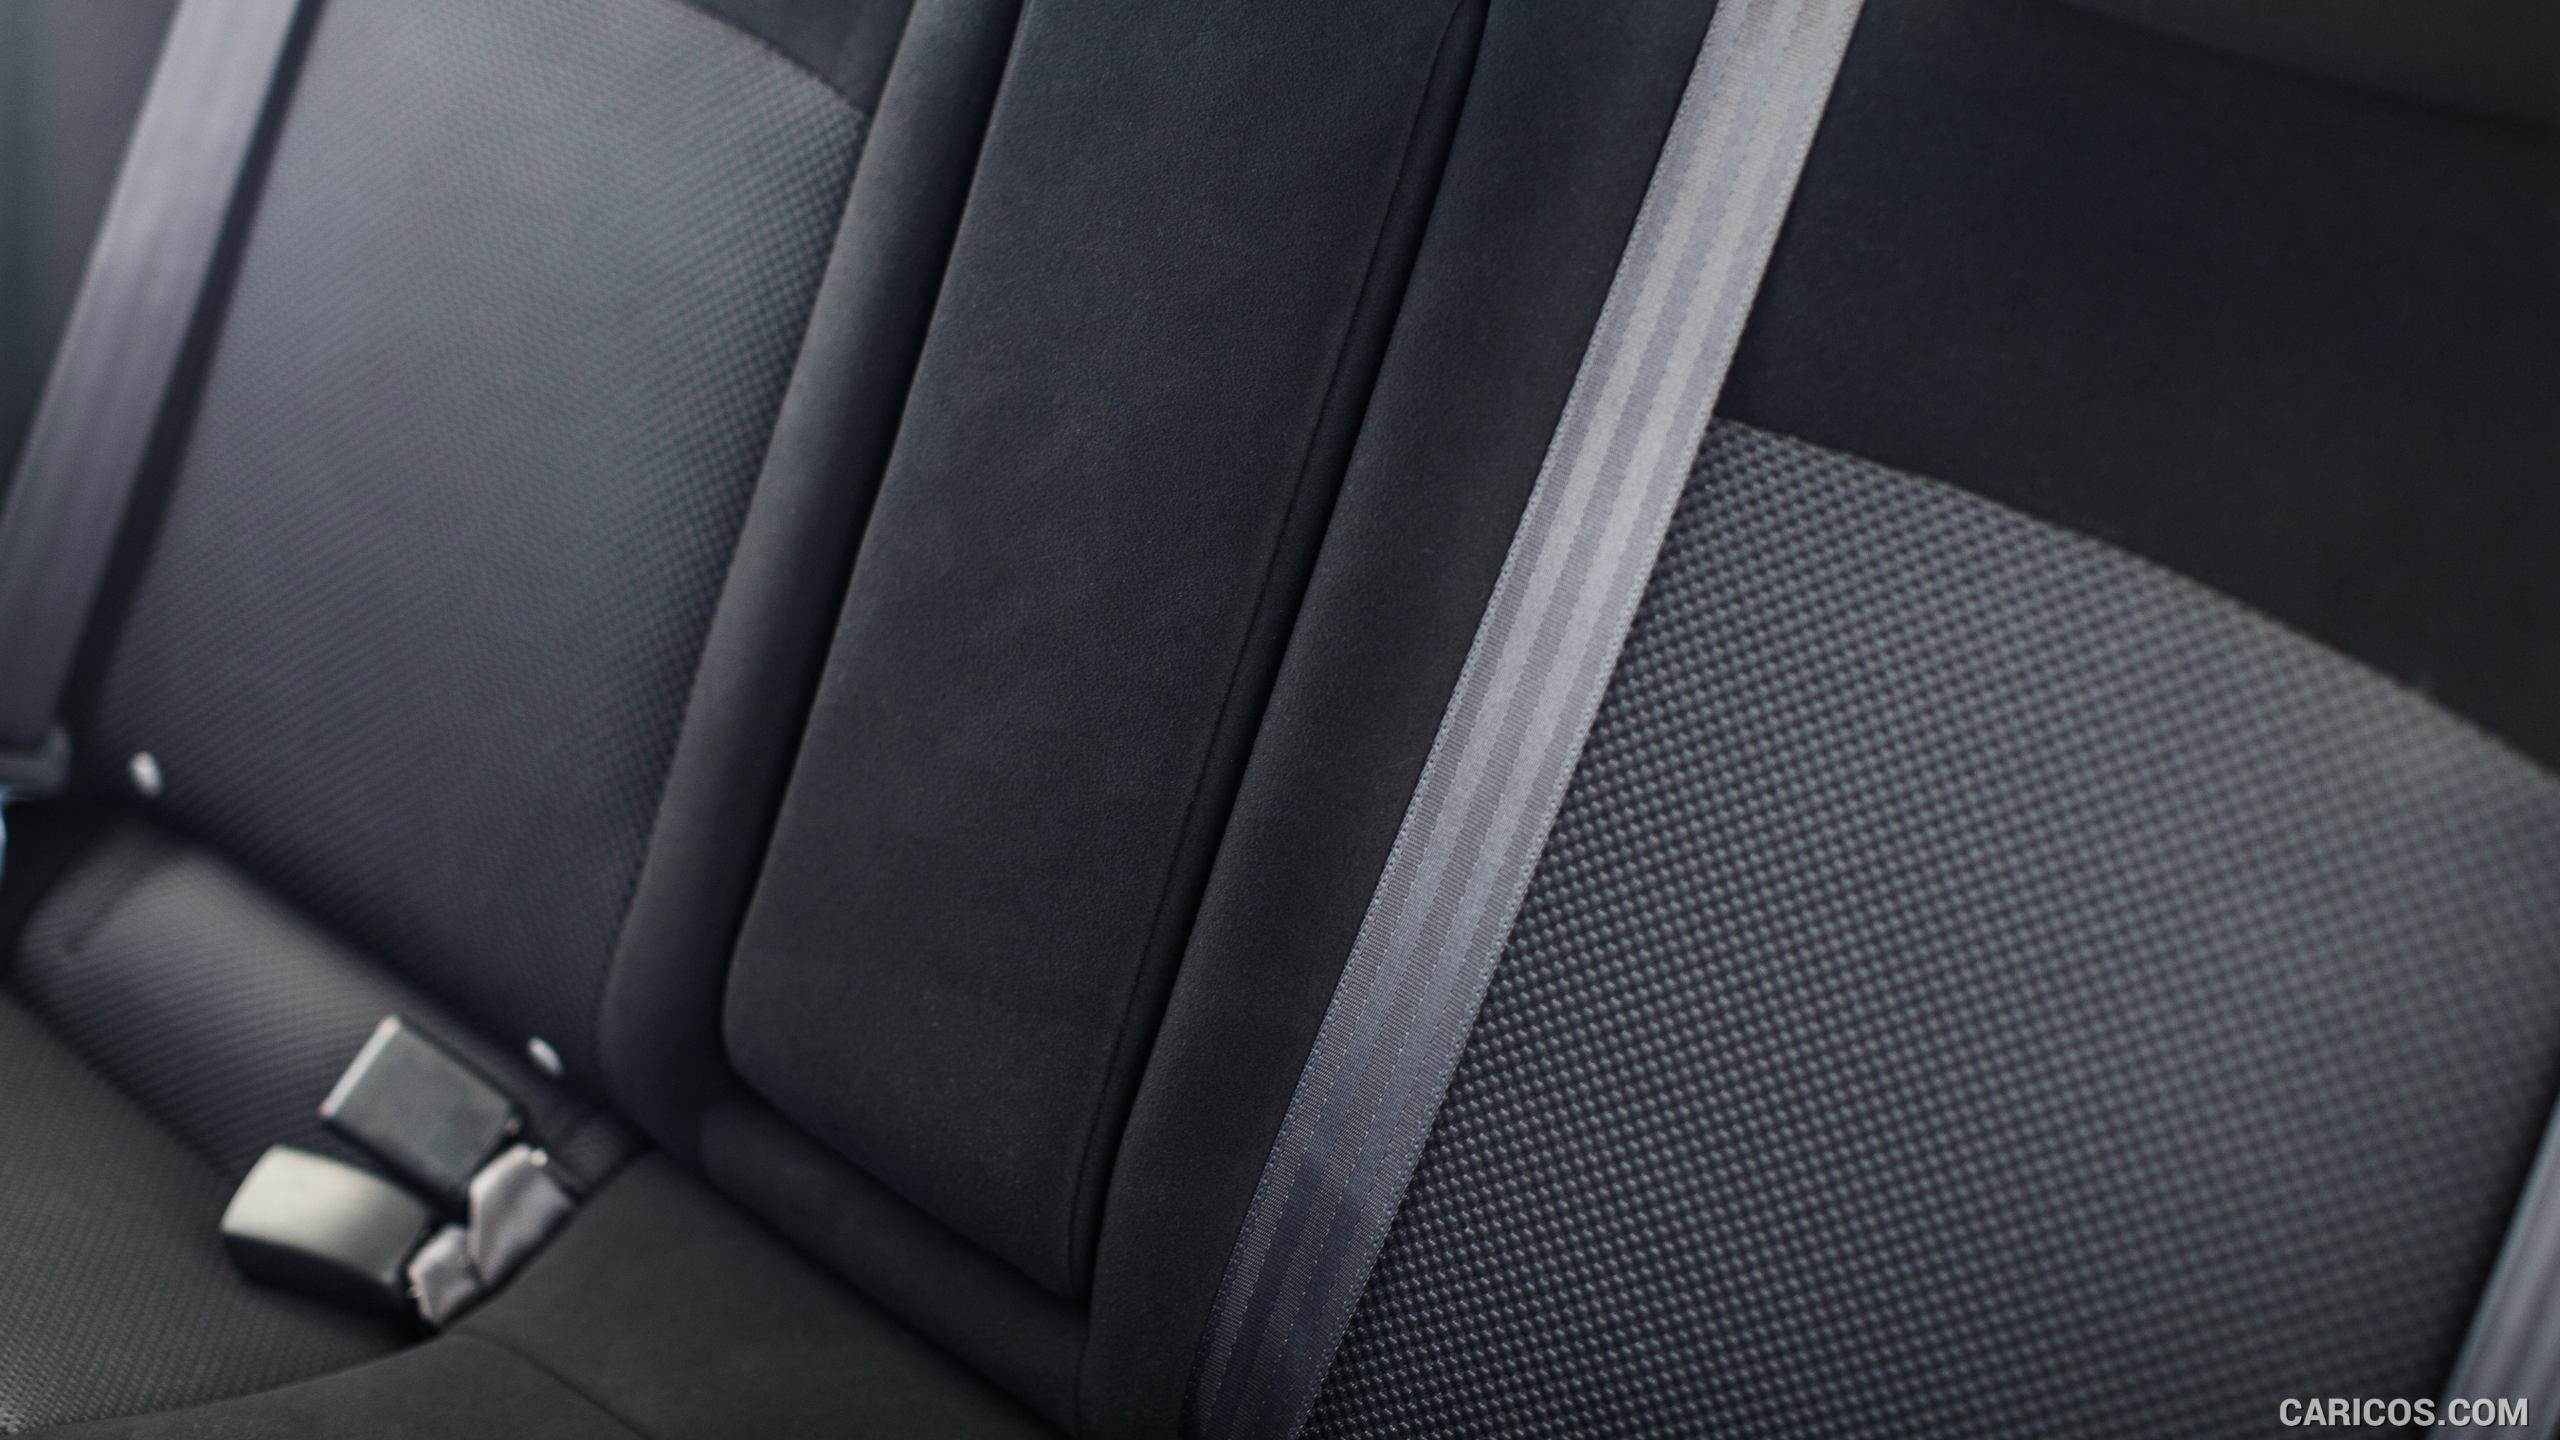 2015 Mitsubishi Lancer Evolution Final Edition - Interior, Rear Seats, #28 of 30